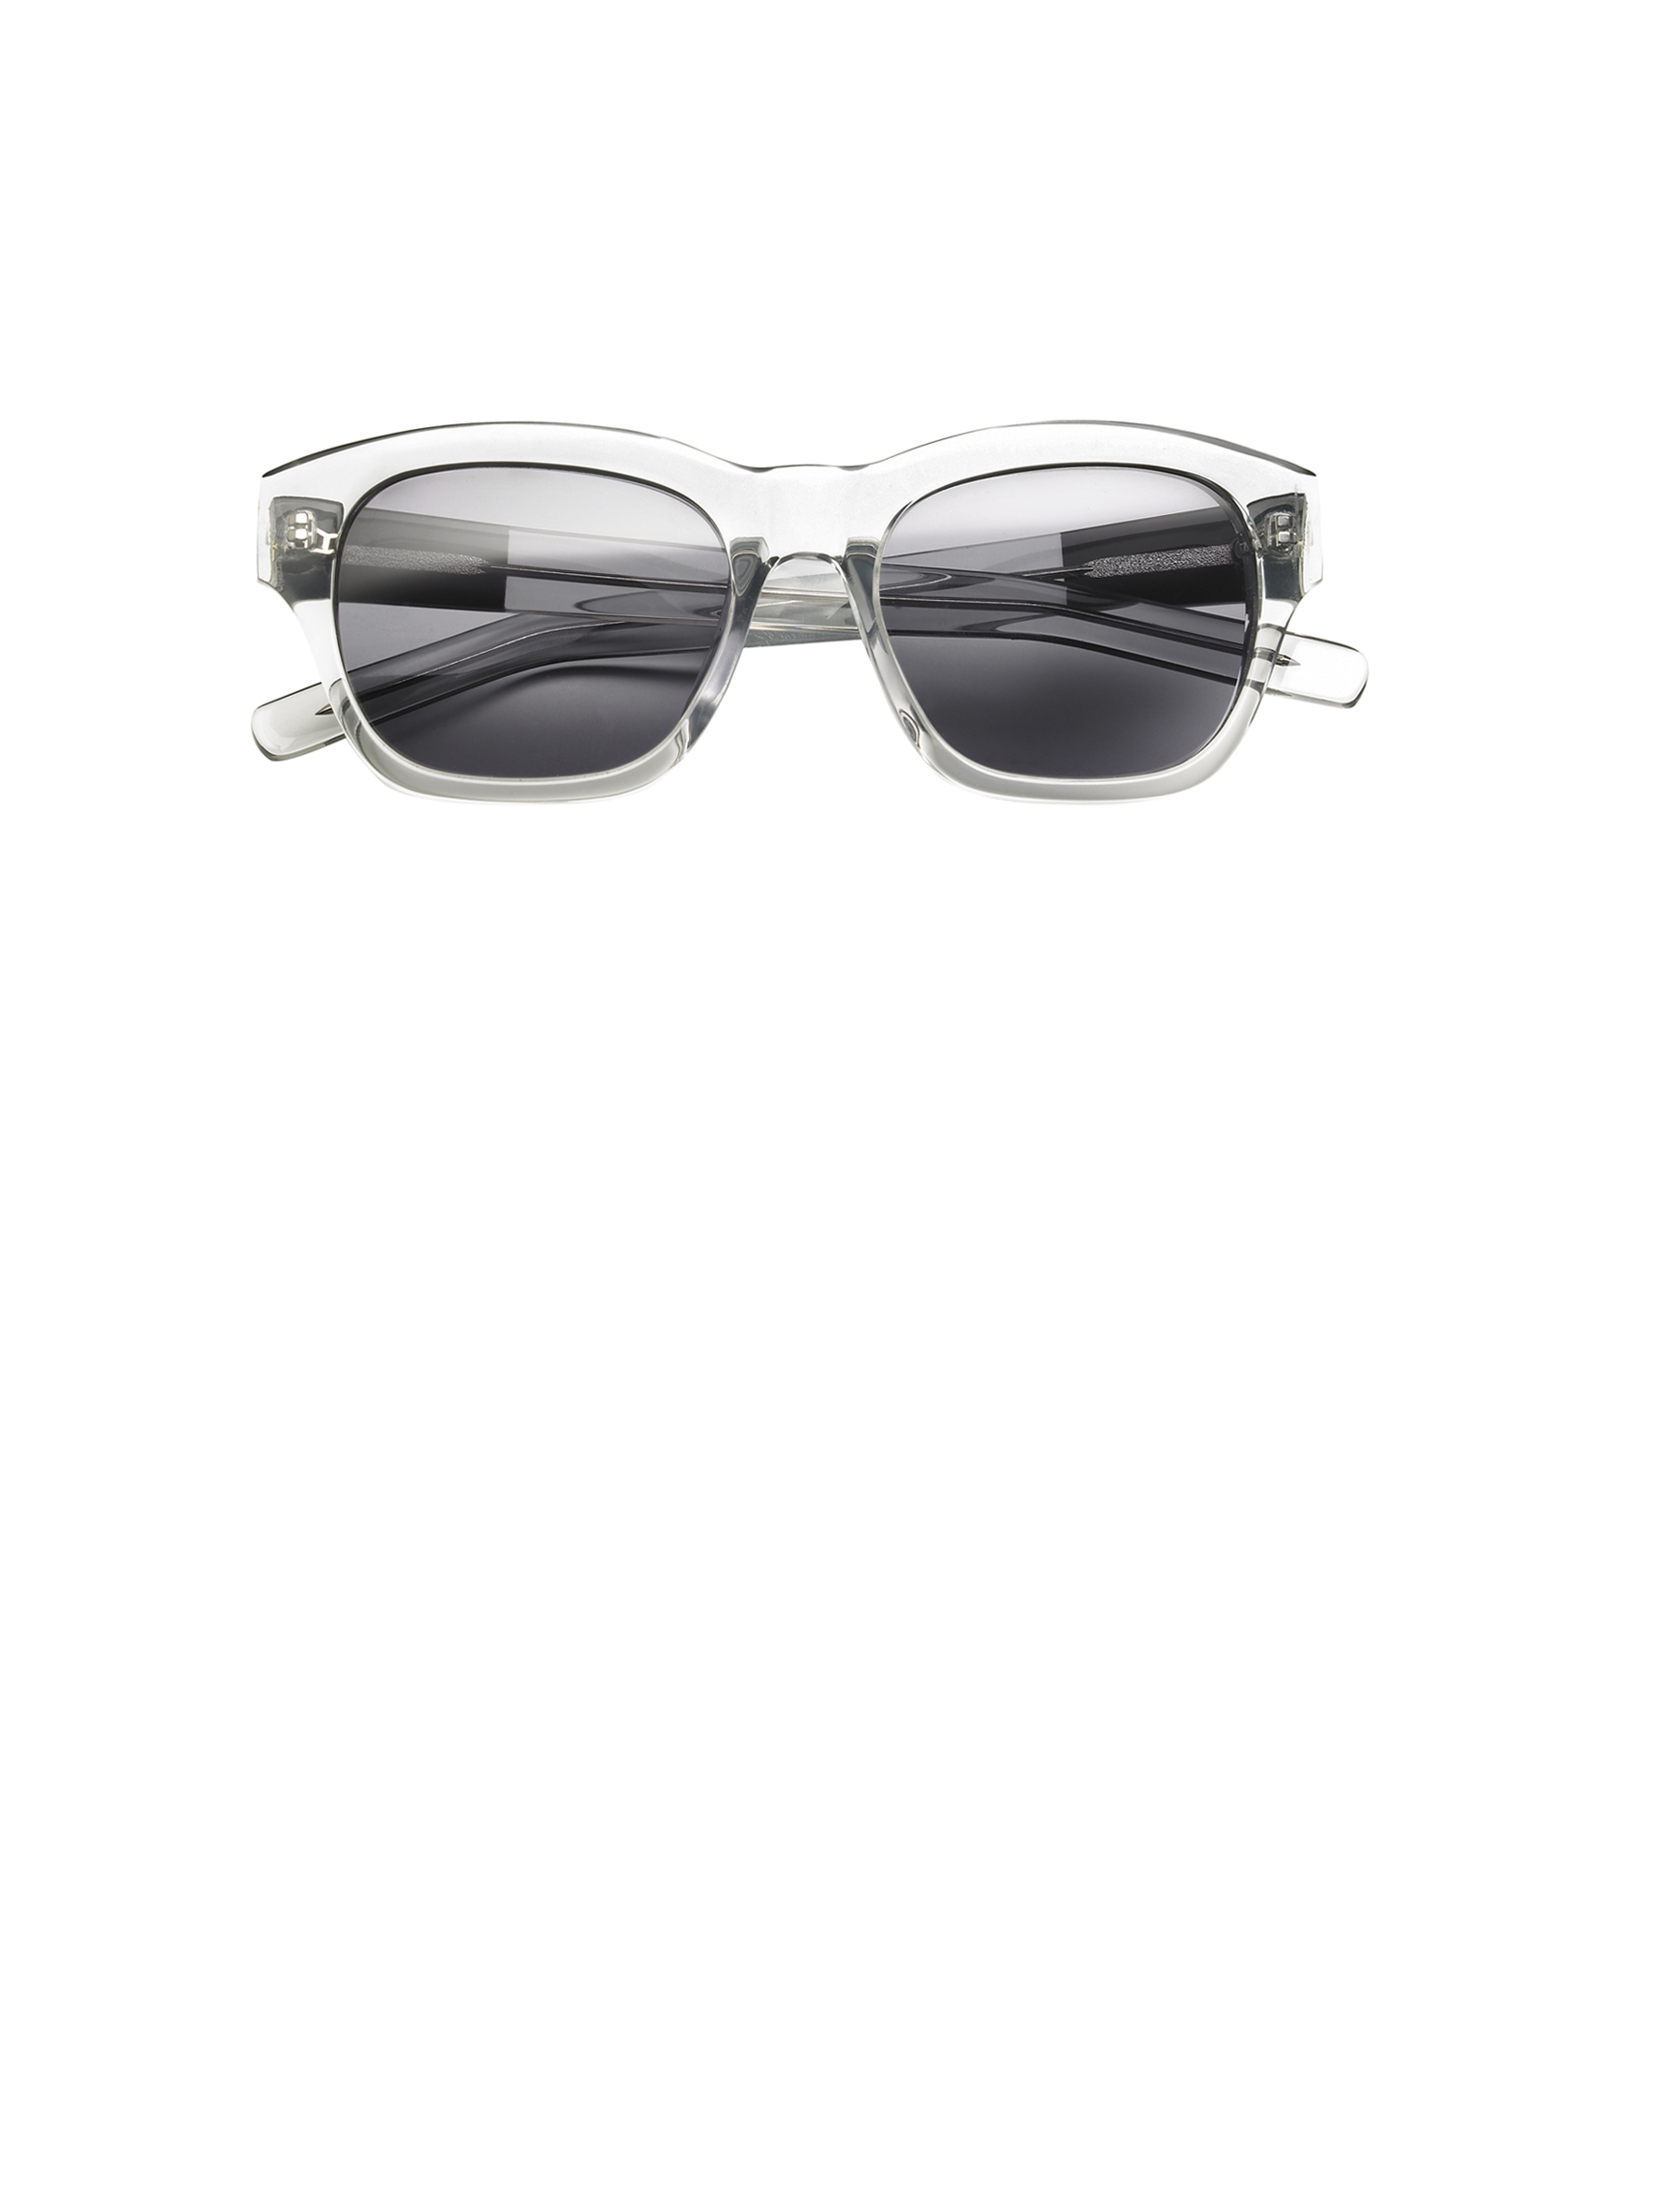 COS SS15 Menswear Sunglasses (1)